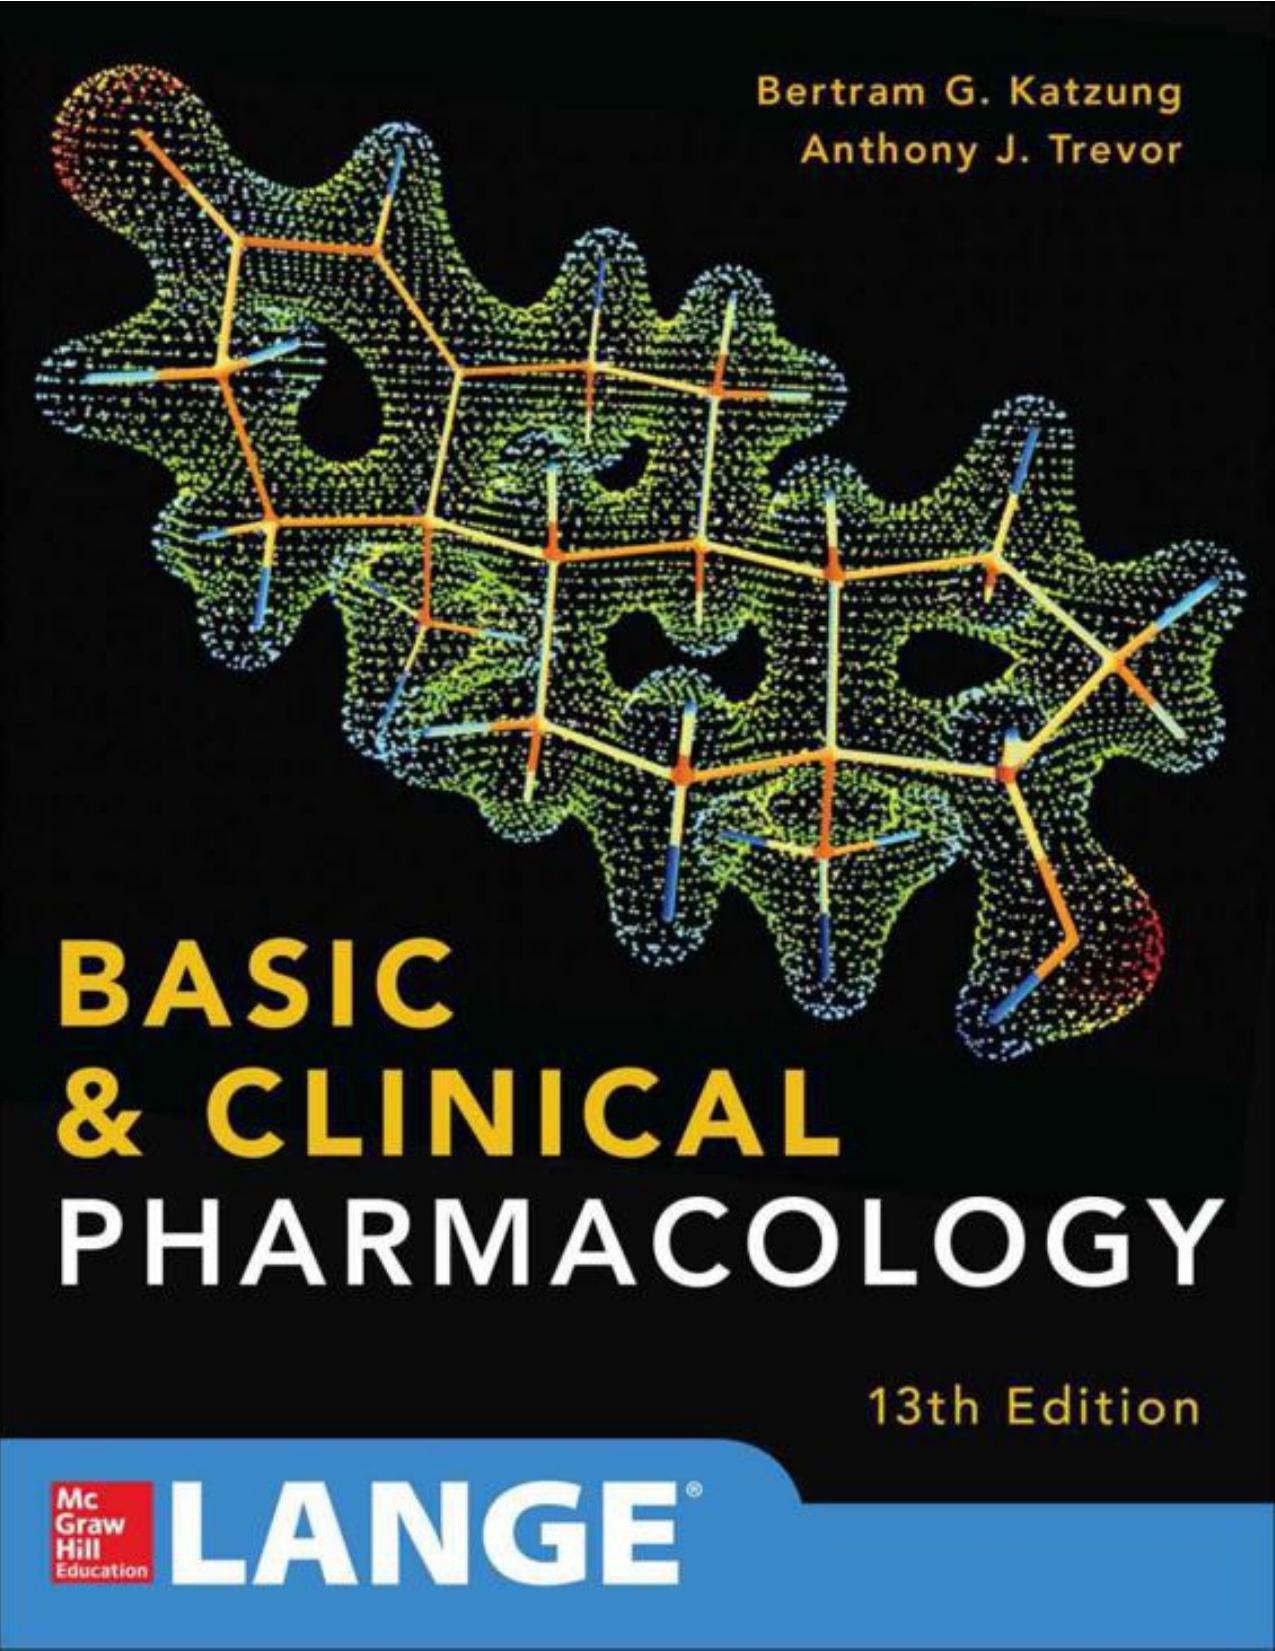 Basic and Clinical Pharmacology 13 E